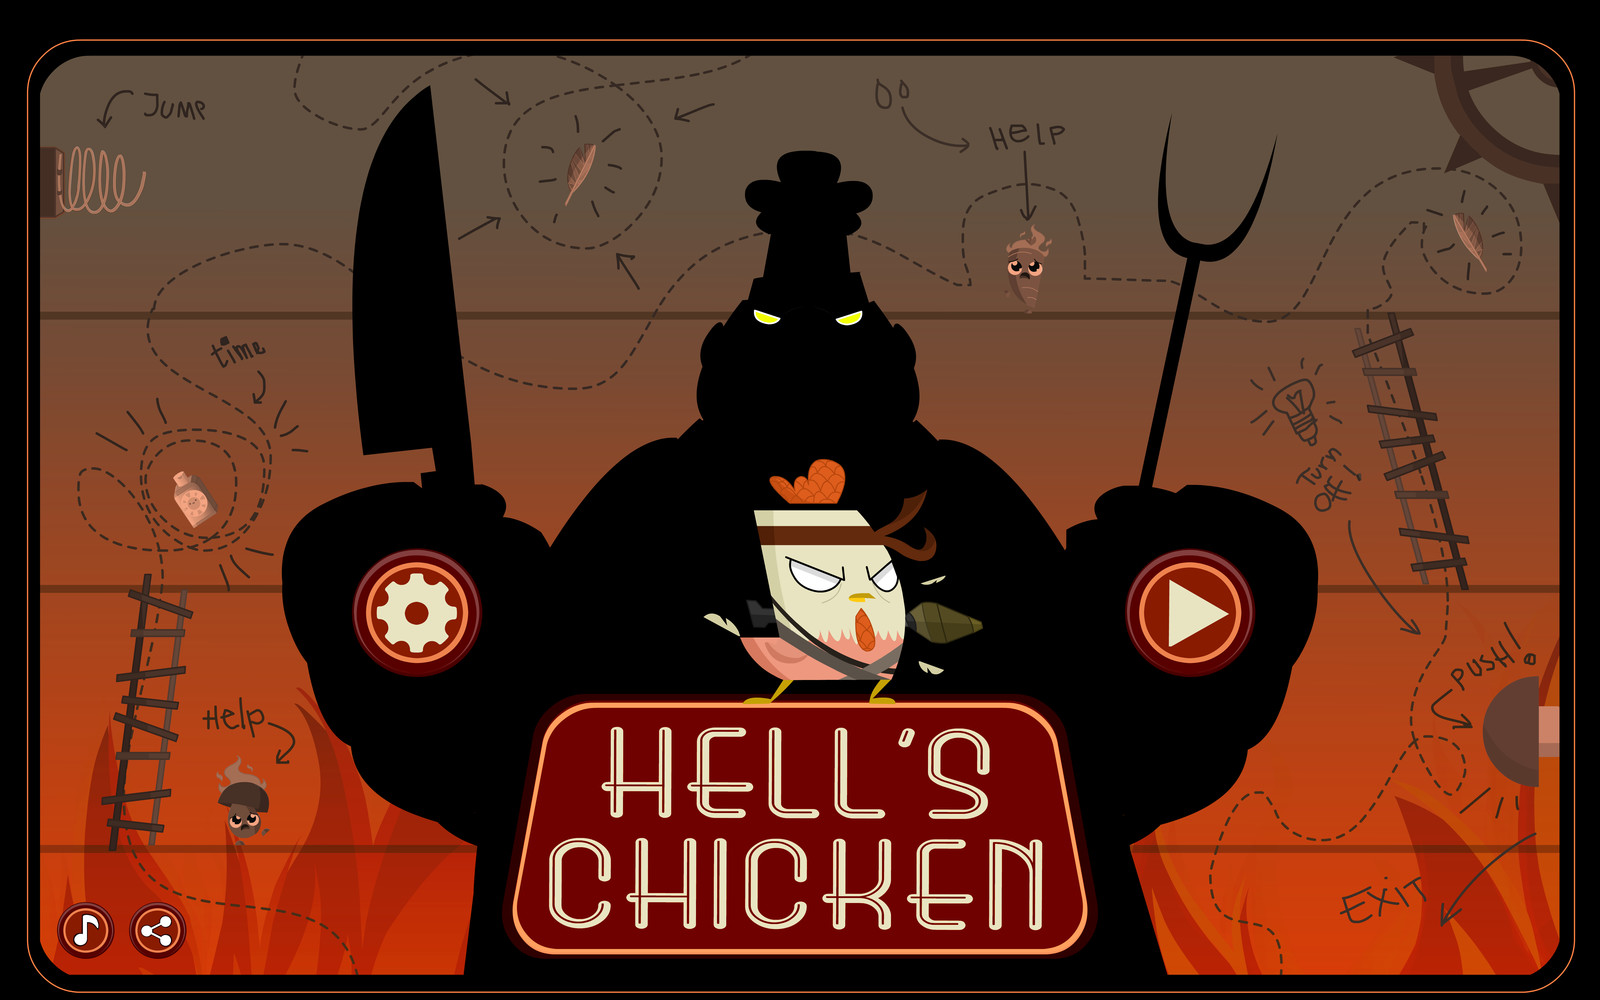 Hell's Chicken - Concept studies